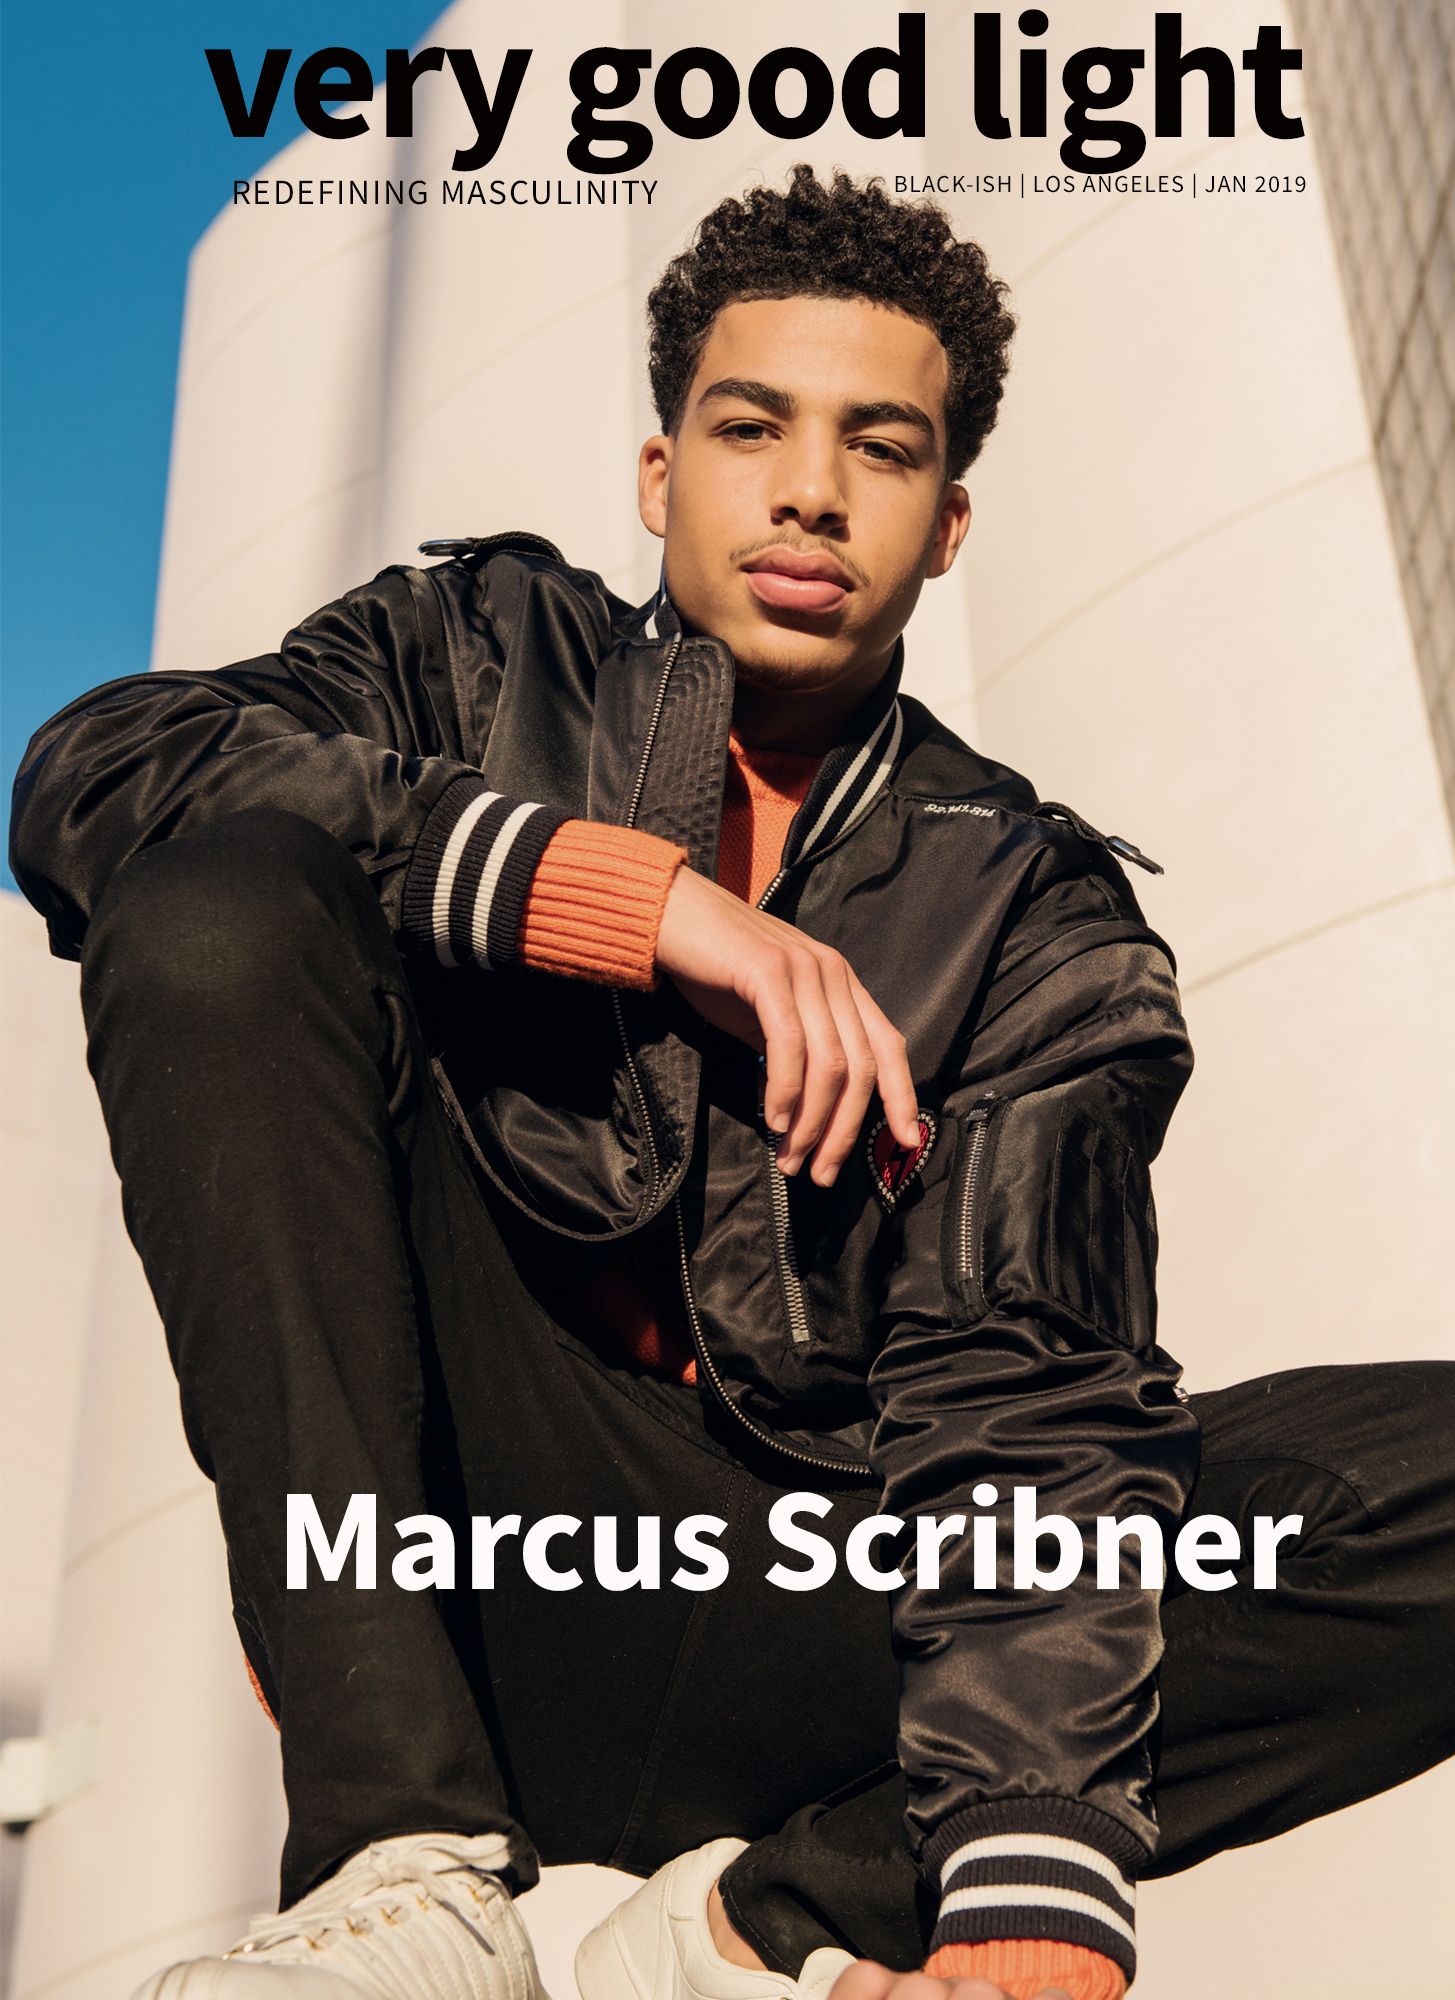 Marcus scribner